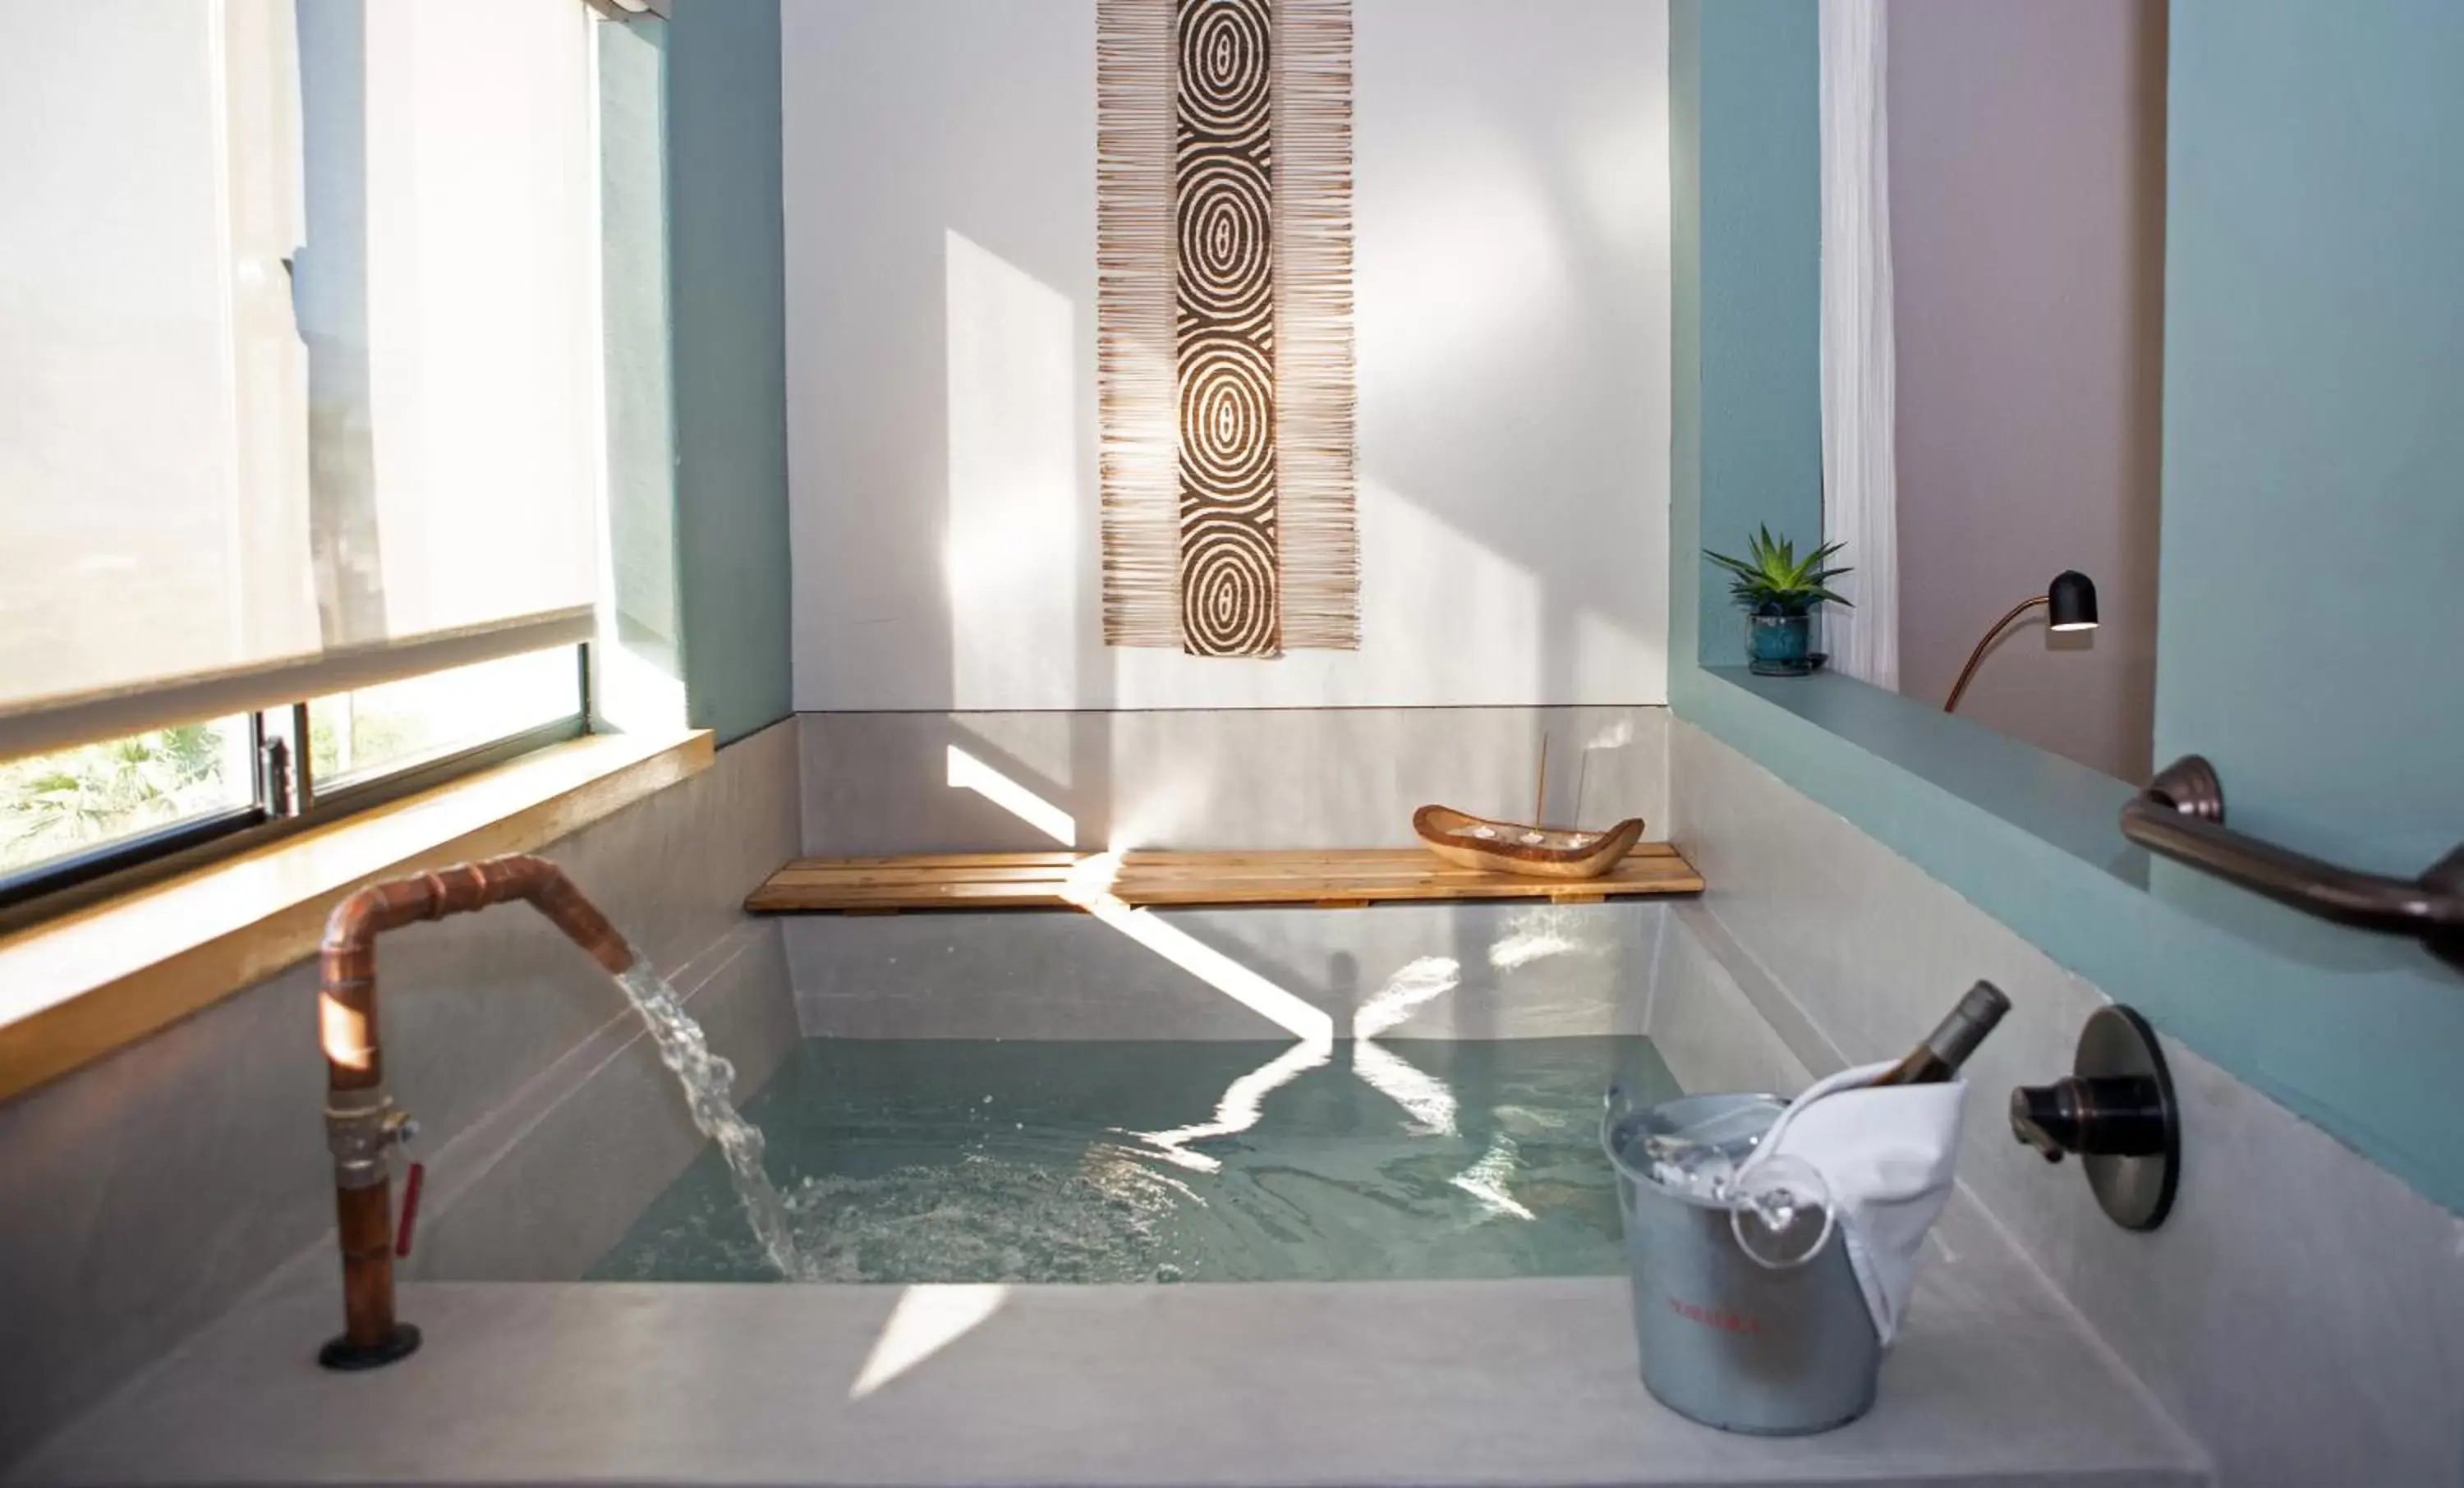 Hot Spring Bath, Bathroom in Azure Palm Hot Springs